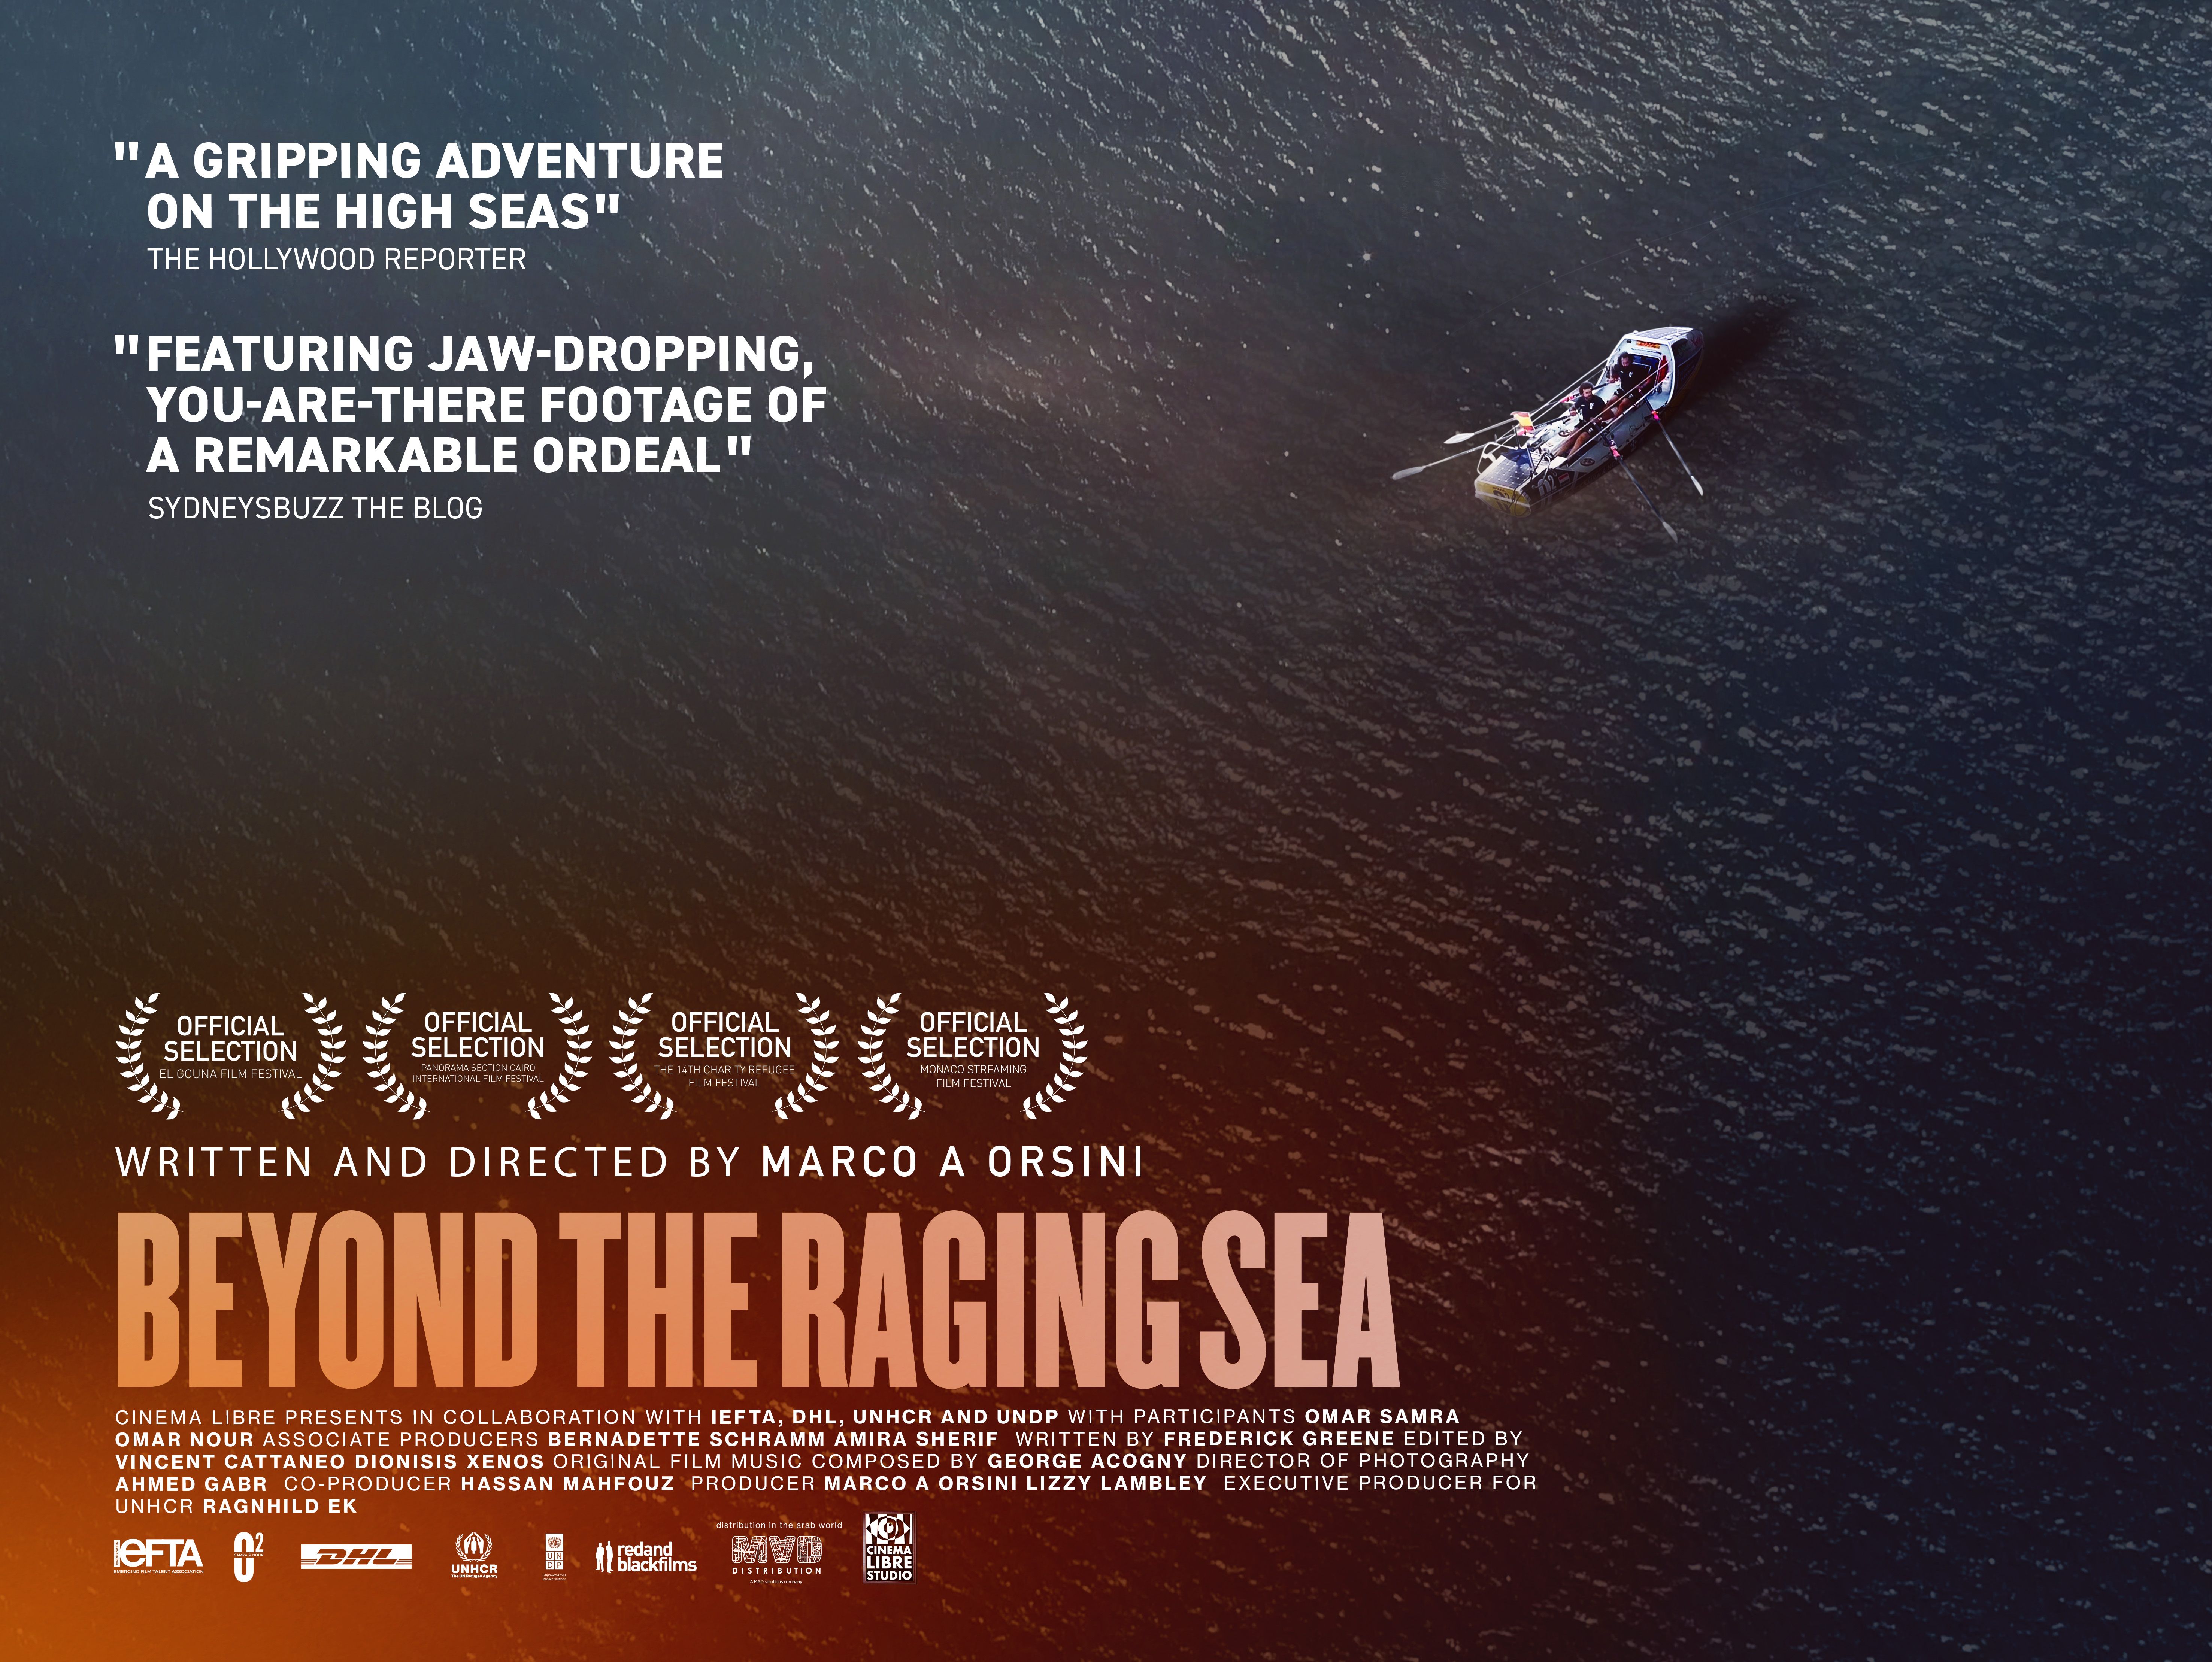 Beyond the Raging Sea landscape image